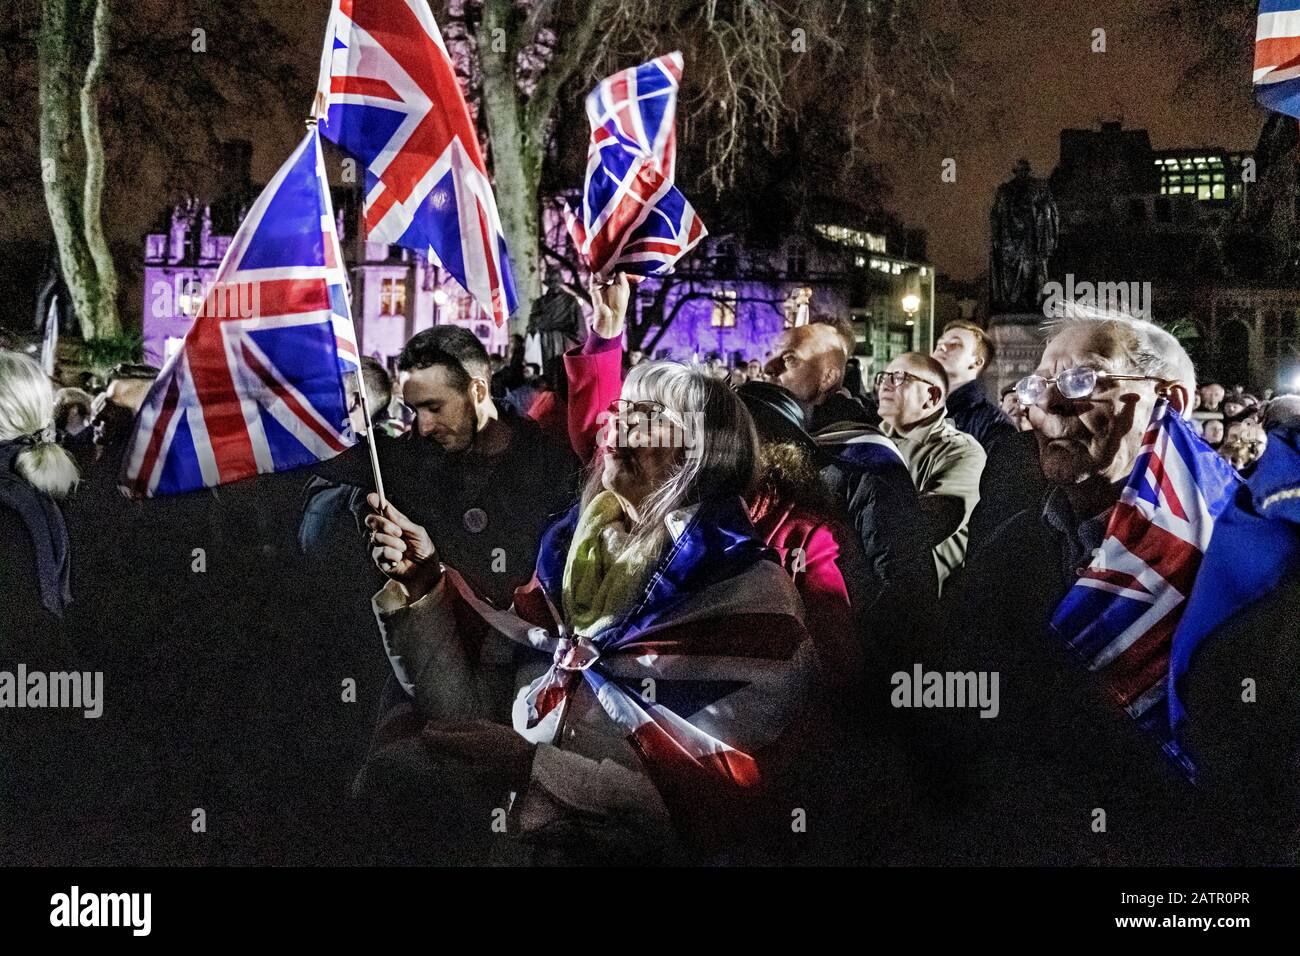 Großbritannien feiert den Austritt aus der EU. Brexit feiern. Parliament Square, London, Großbritannien. Januar 2020. Stockfoto